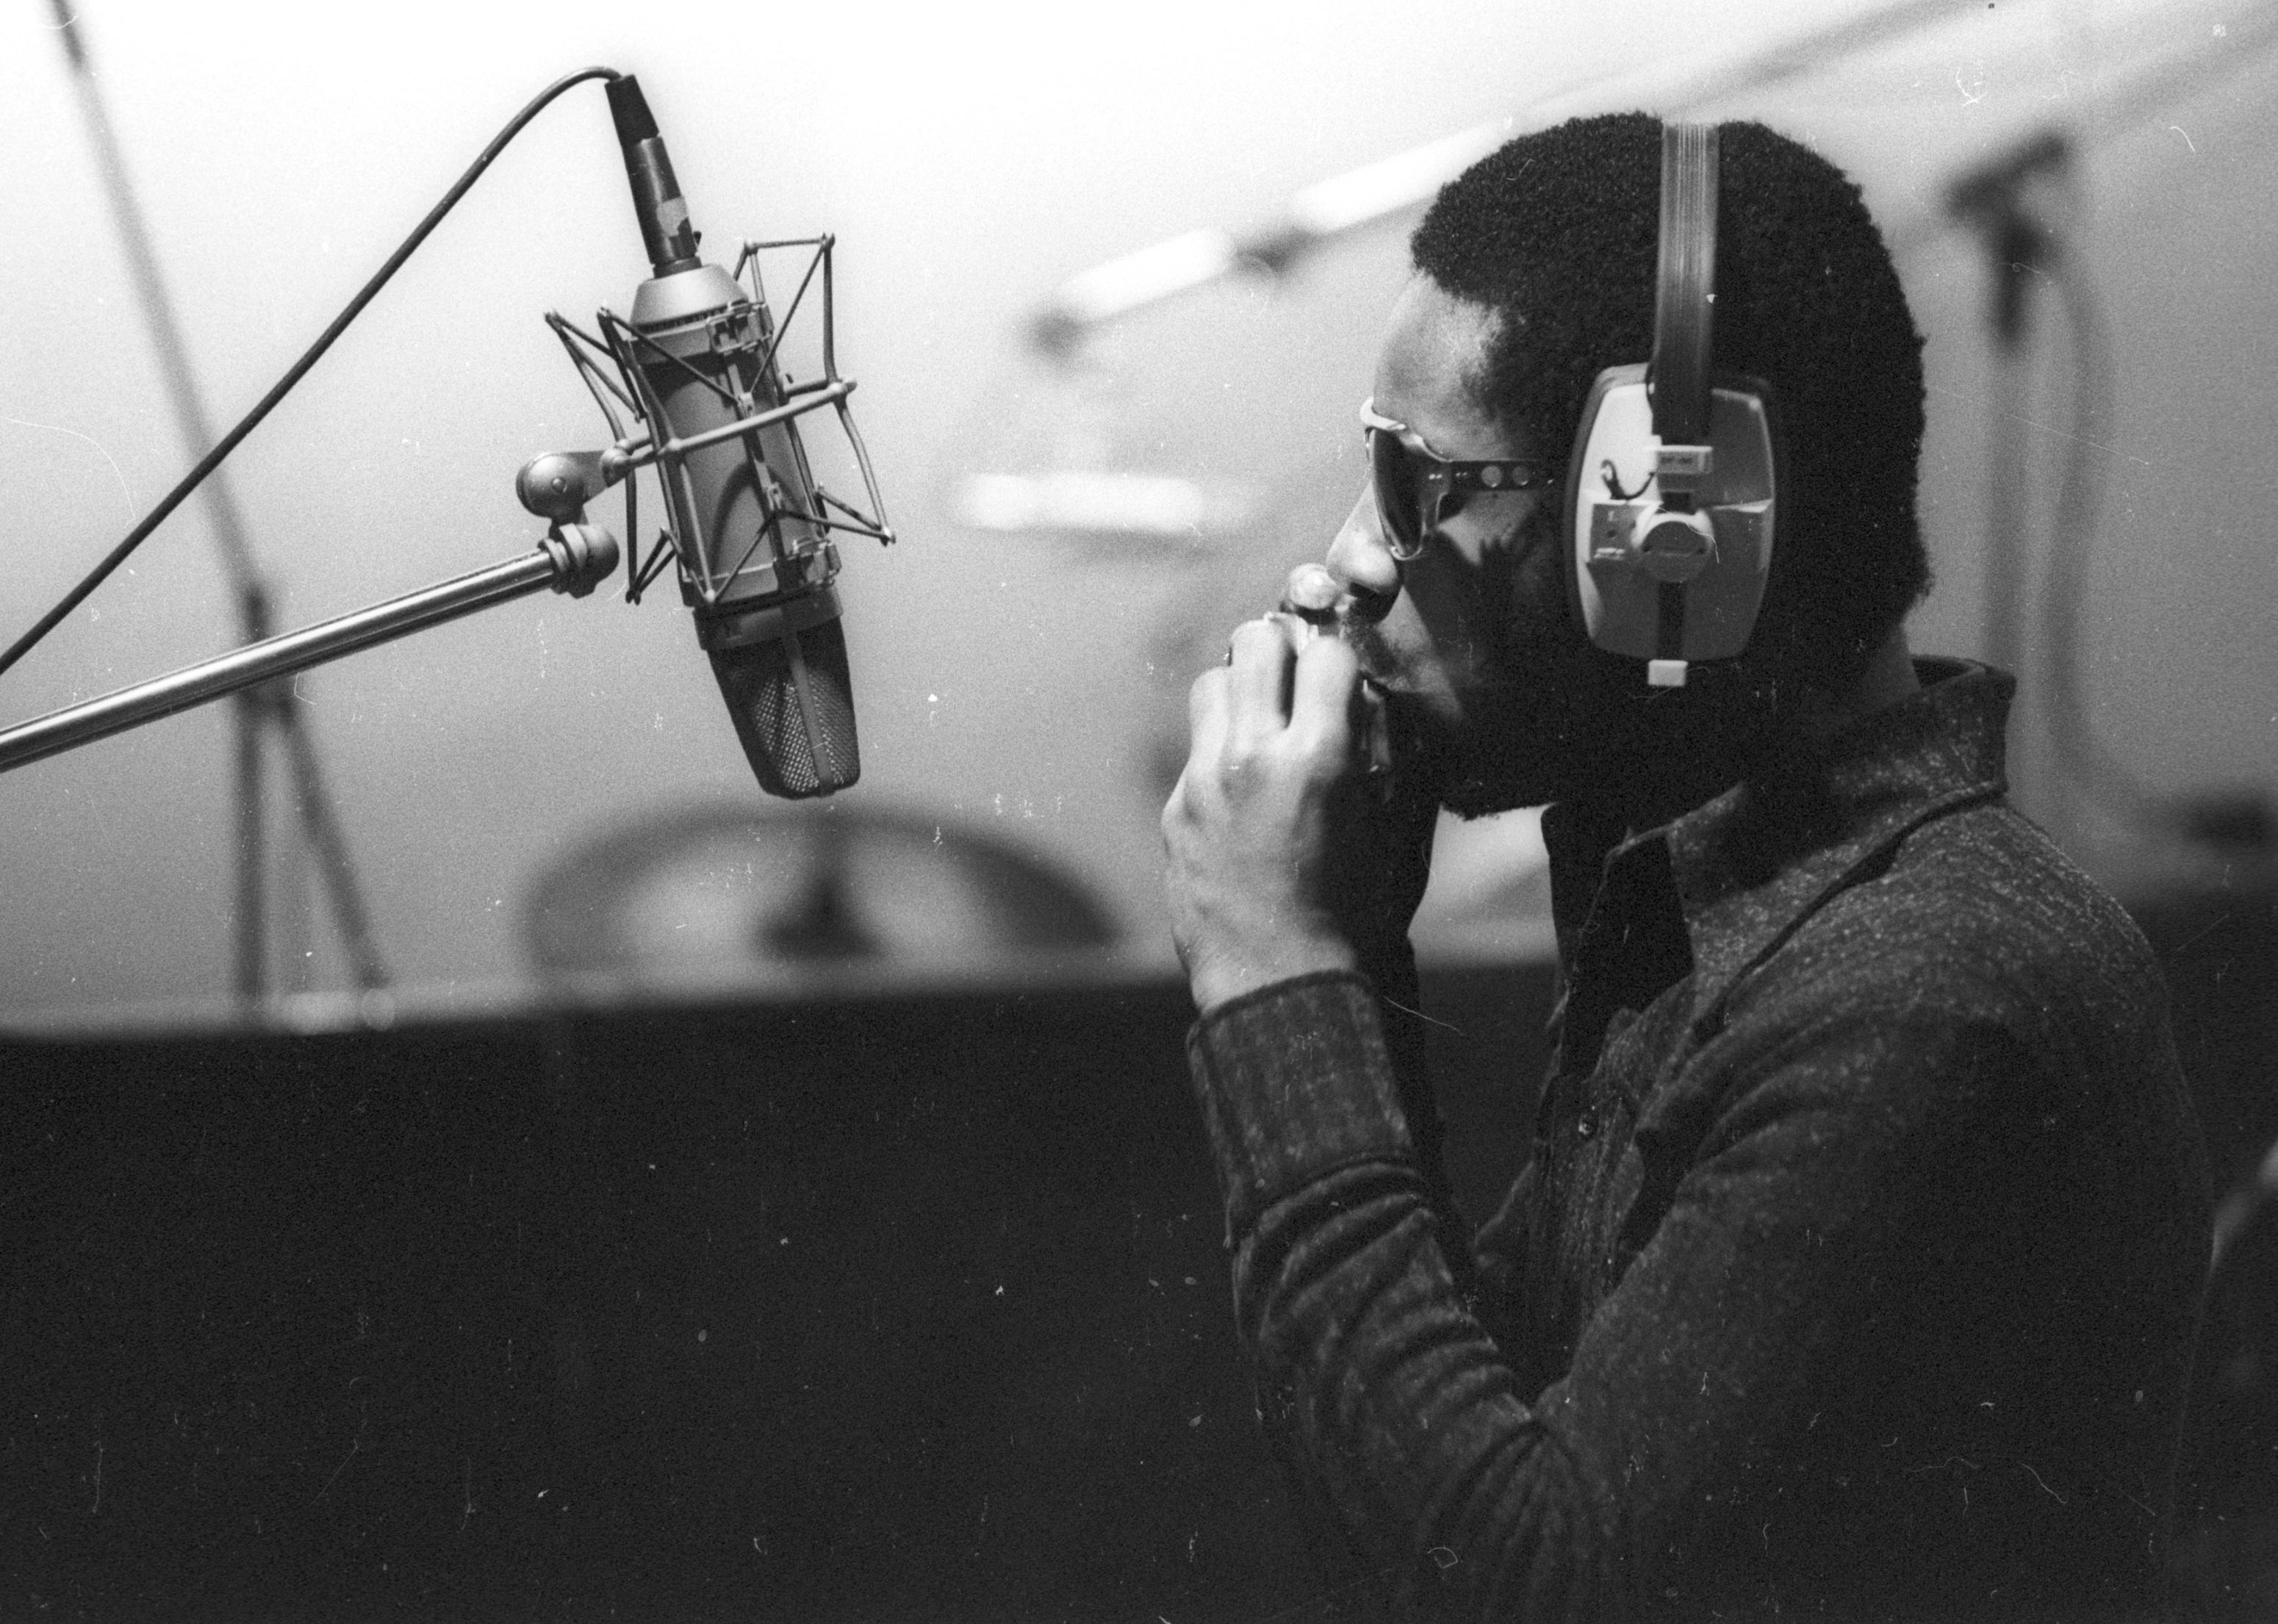 Stevie Wonder recording harmonica in the studio.